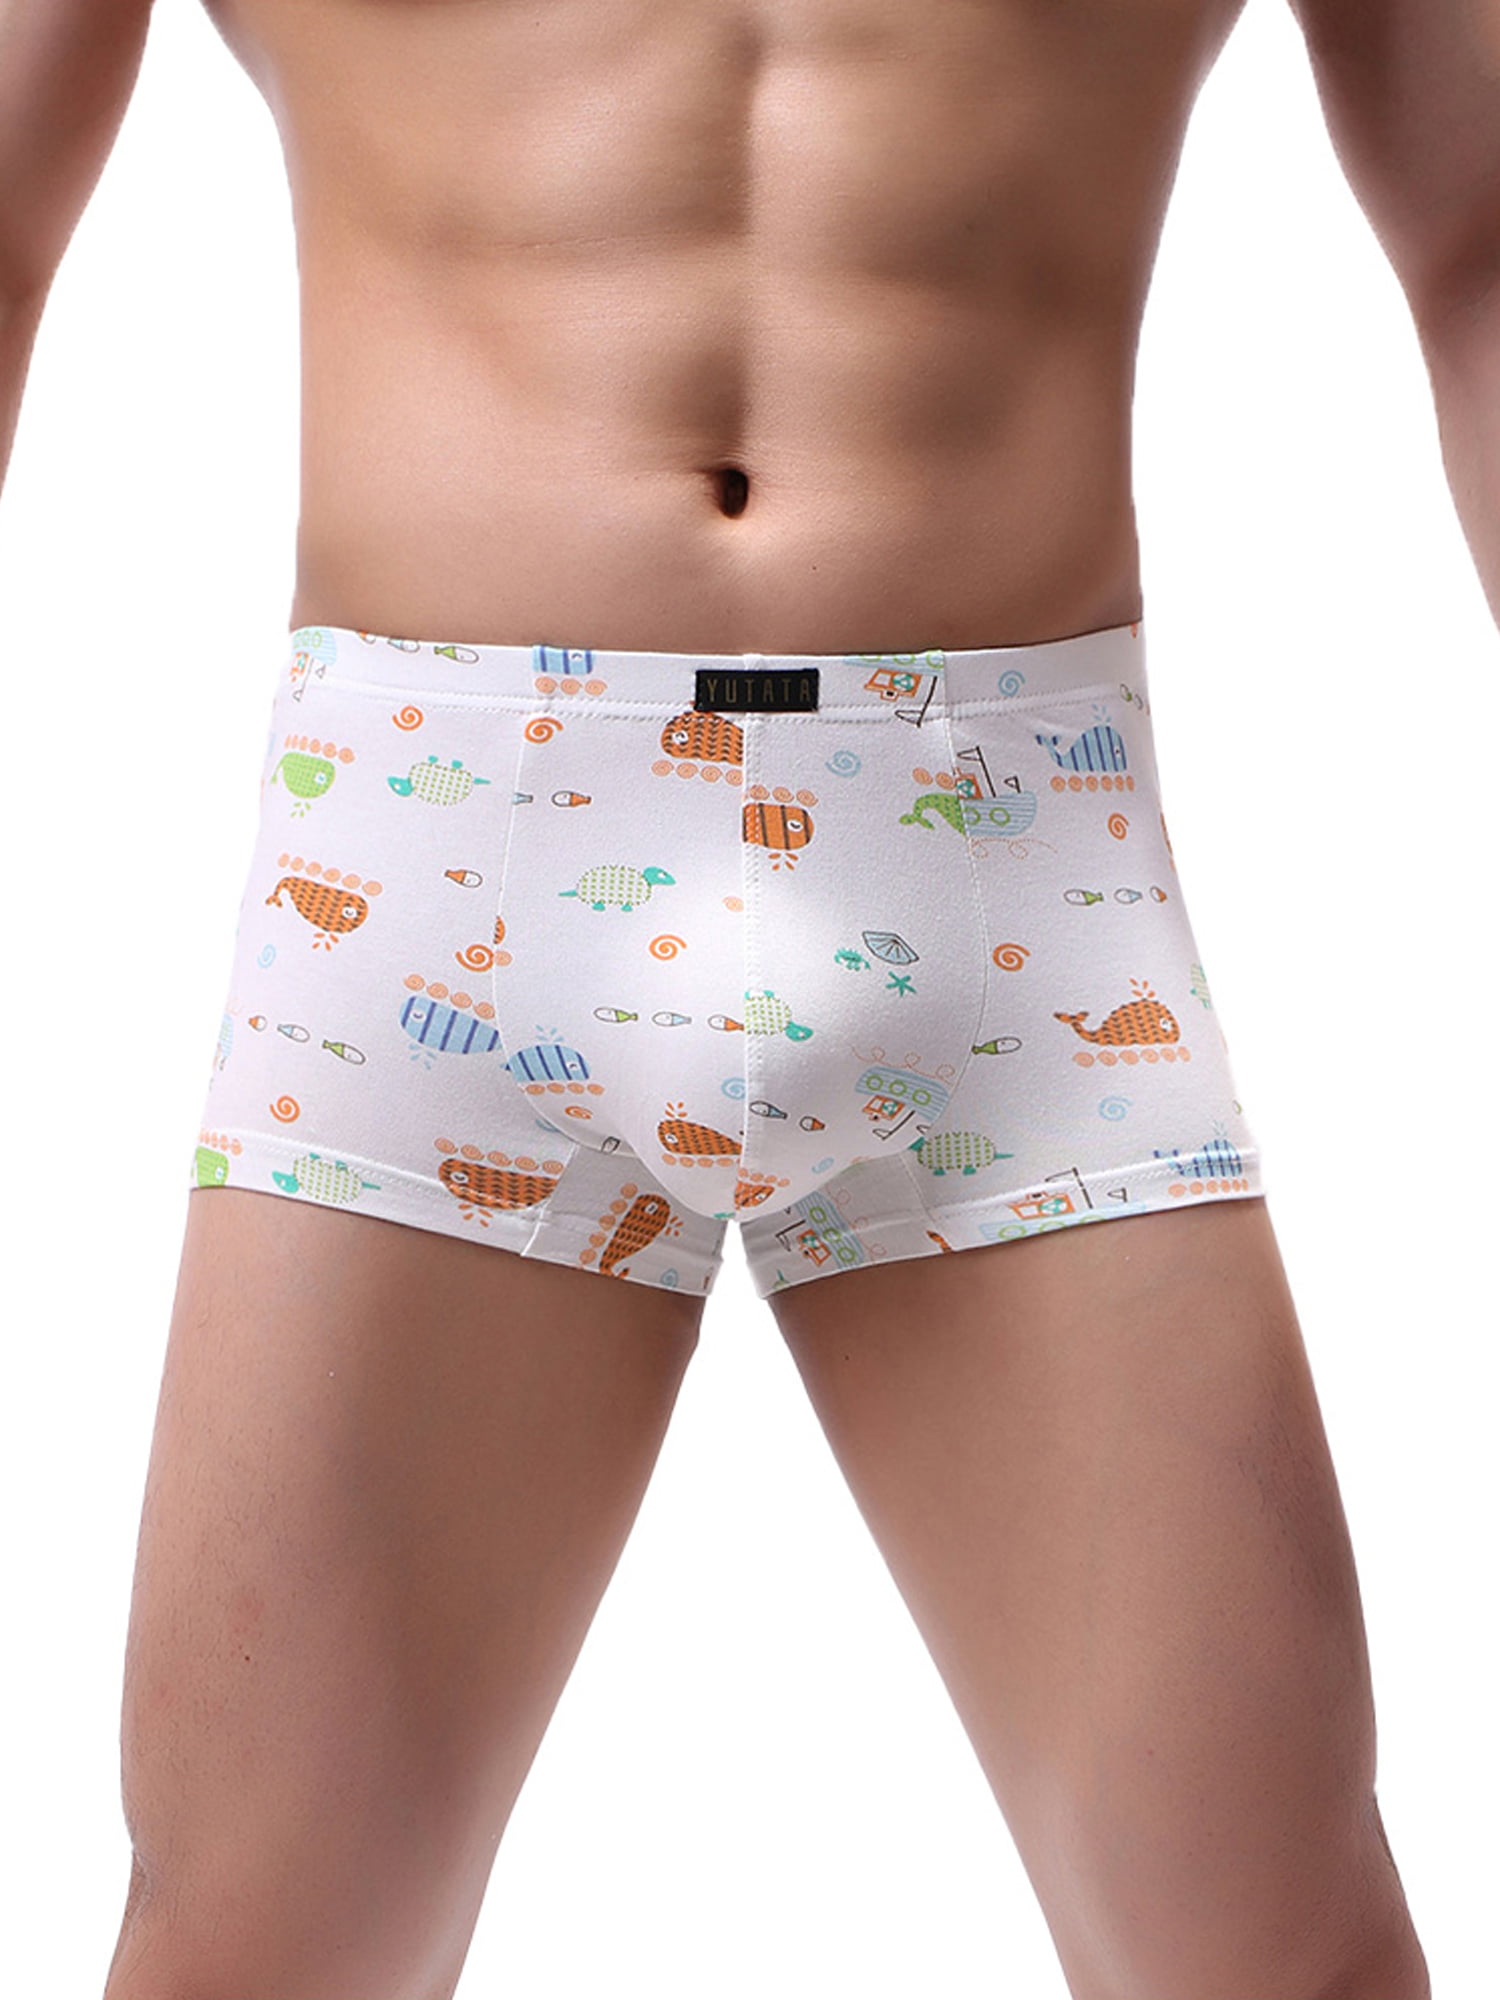 FEIMEN Men's Active Cotton Boxer Briefs Men Cartoon Underwear Boy Shorts  Bikini Sports Fitness Panties Shorts Underpants # A M 